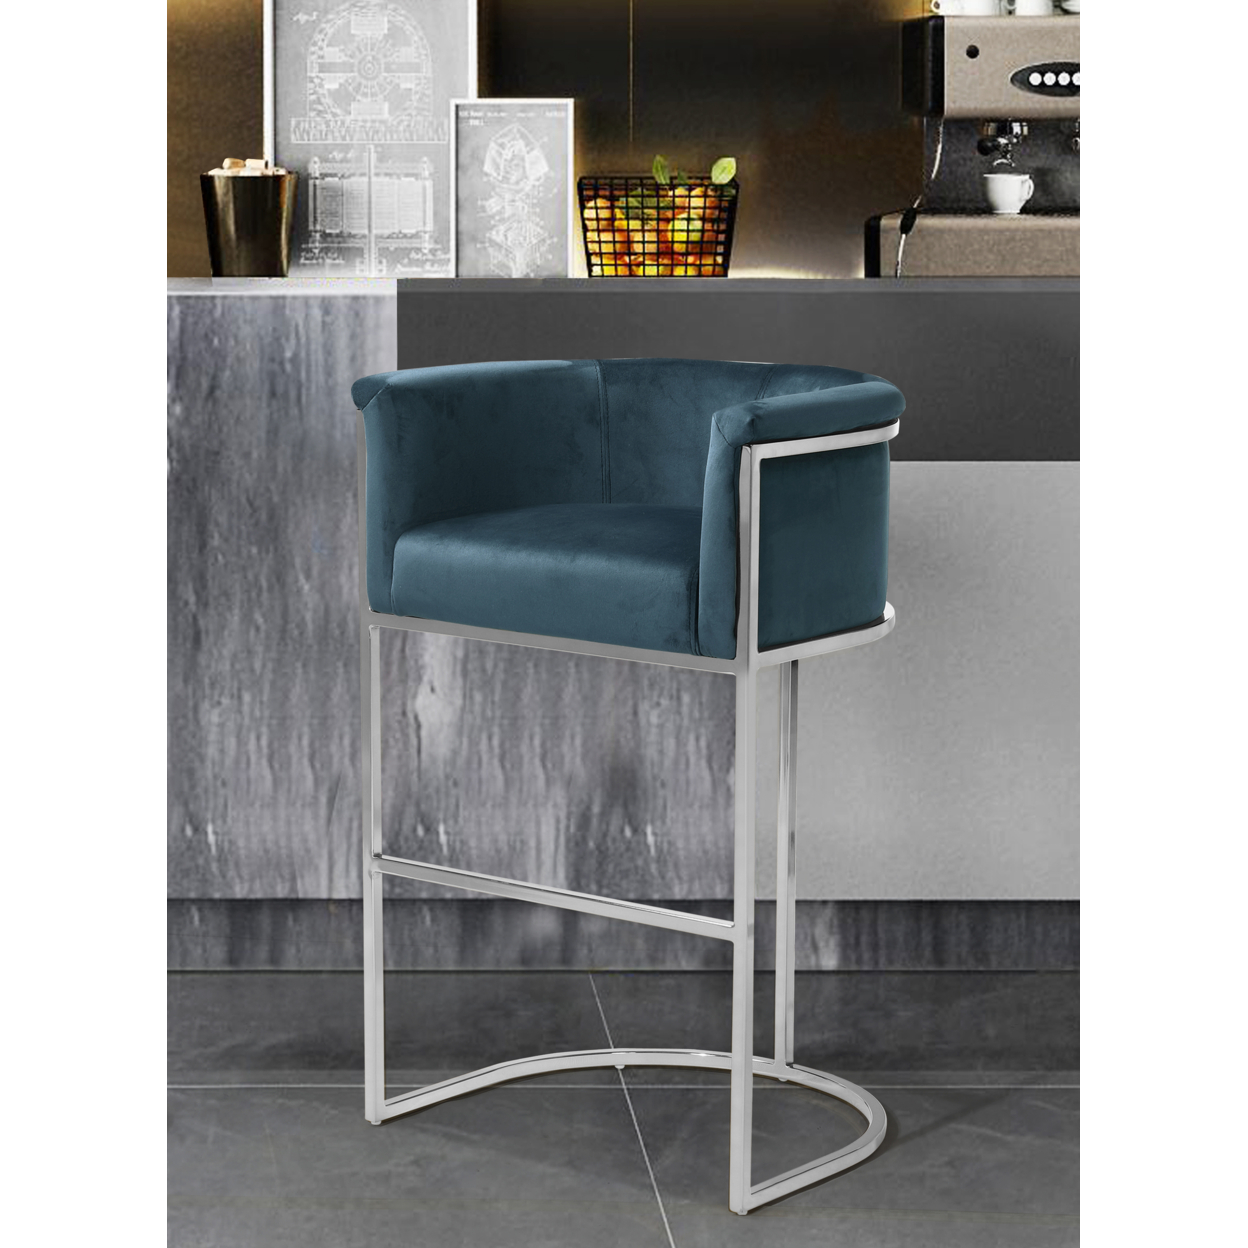 Iconic Home Scout Bar Stool Chair Velvet Upholstered Rolled Shelter Arm Design Half-Moon Chrometone Solid Metal U-Shaped Base - Teal